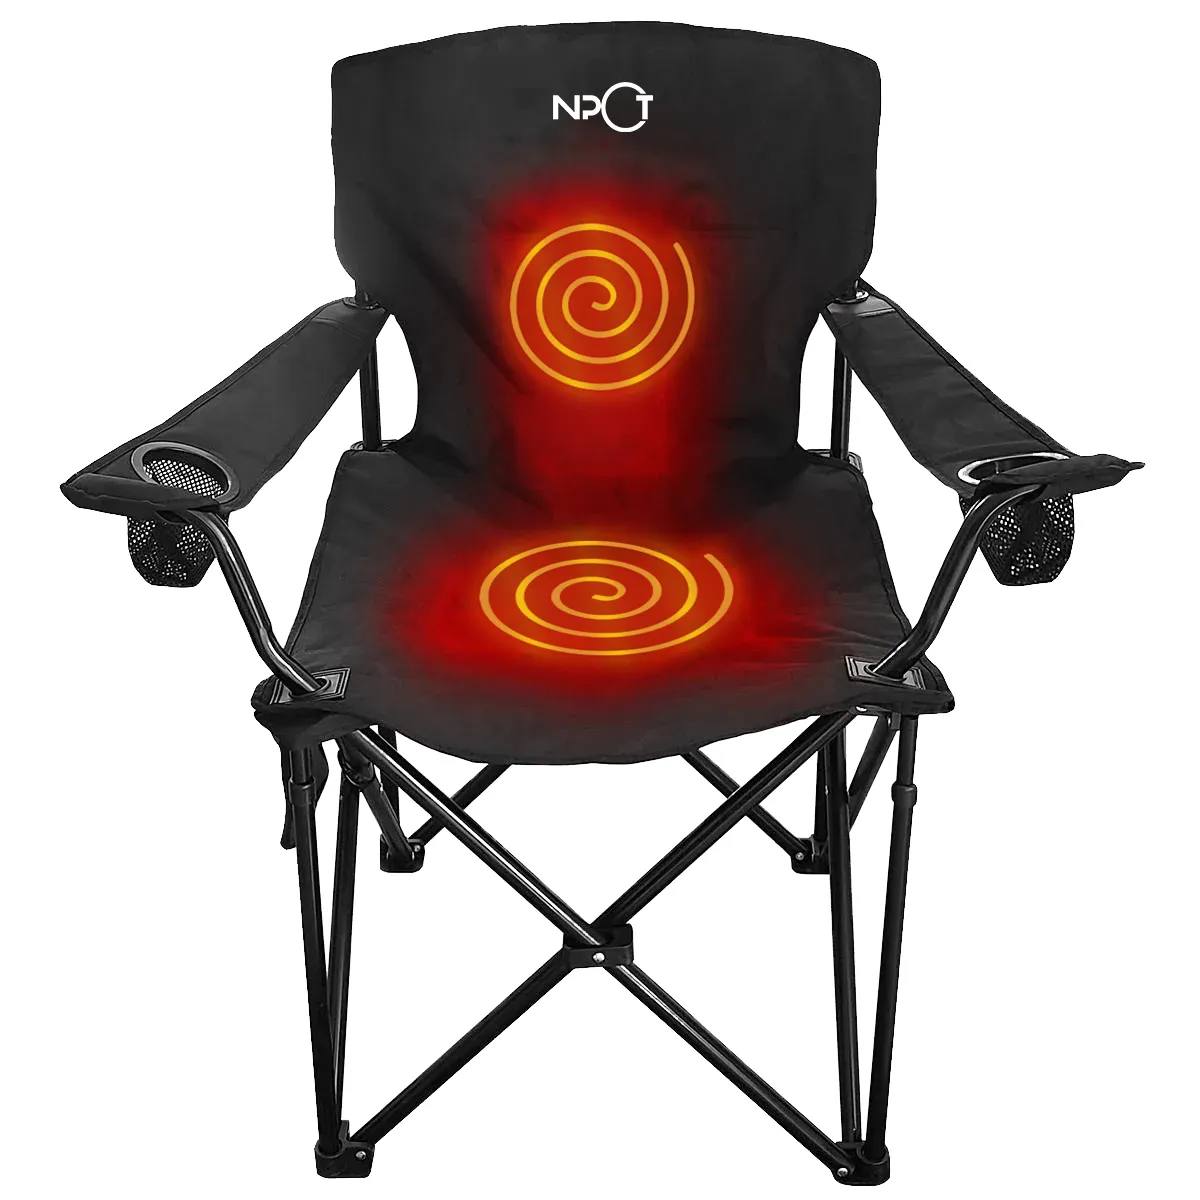 NPOT 온열 라운지 의자 비치 휴대용 낚시 의자